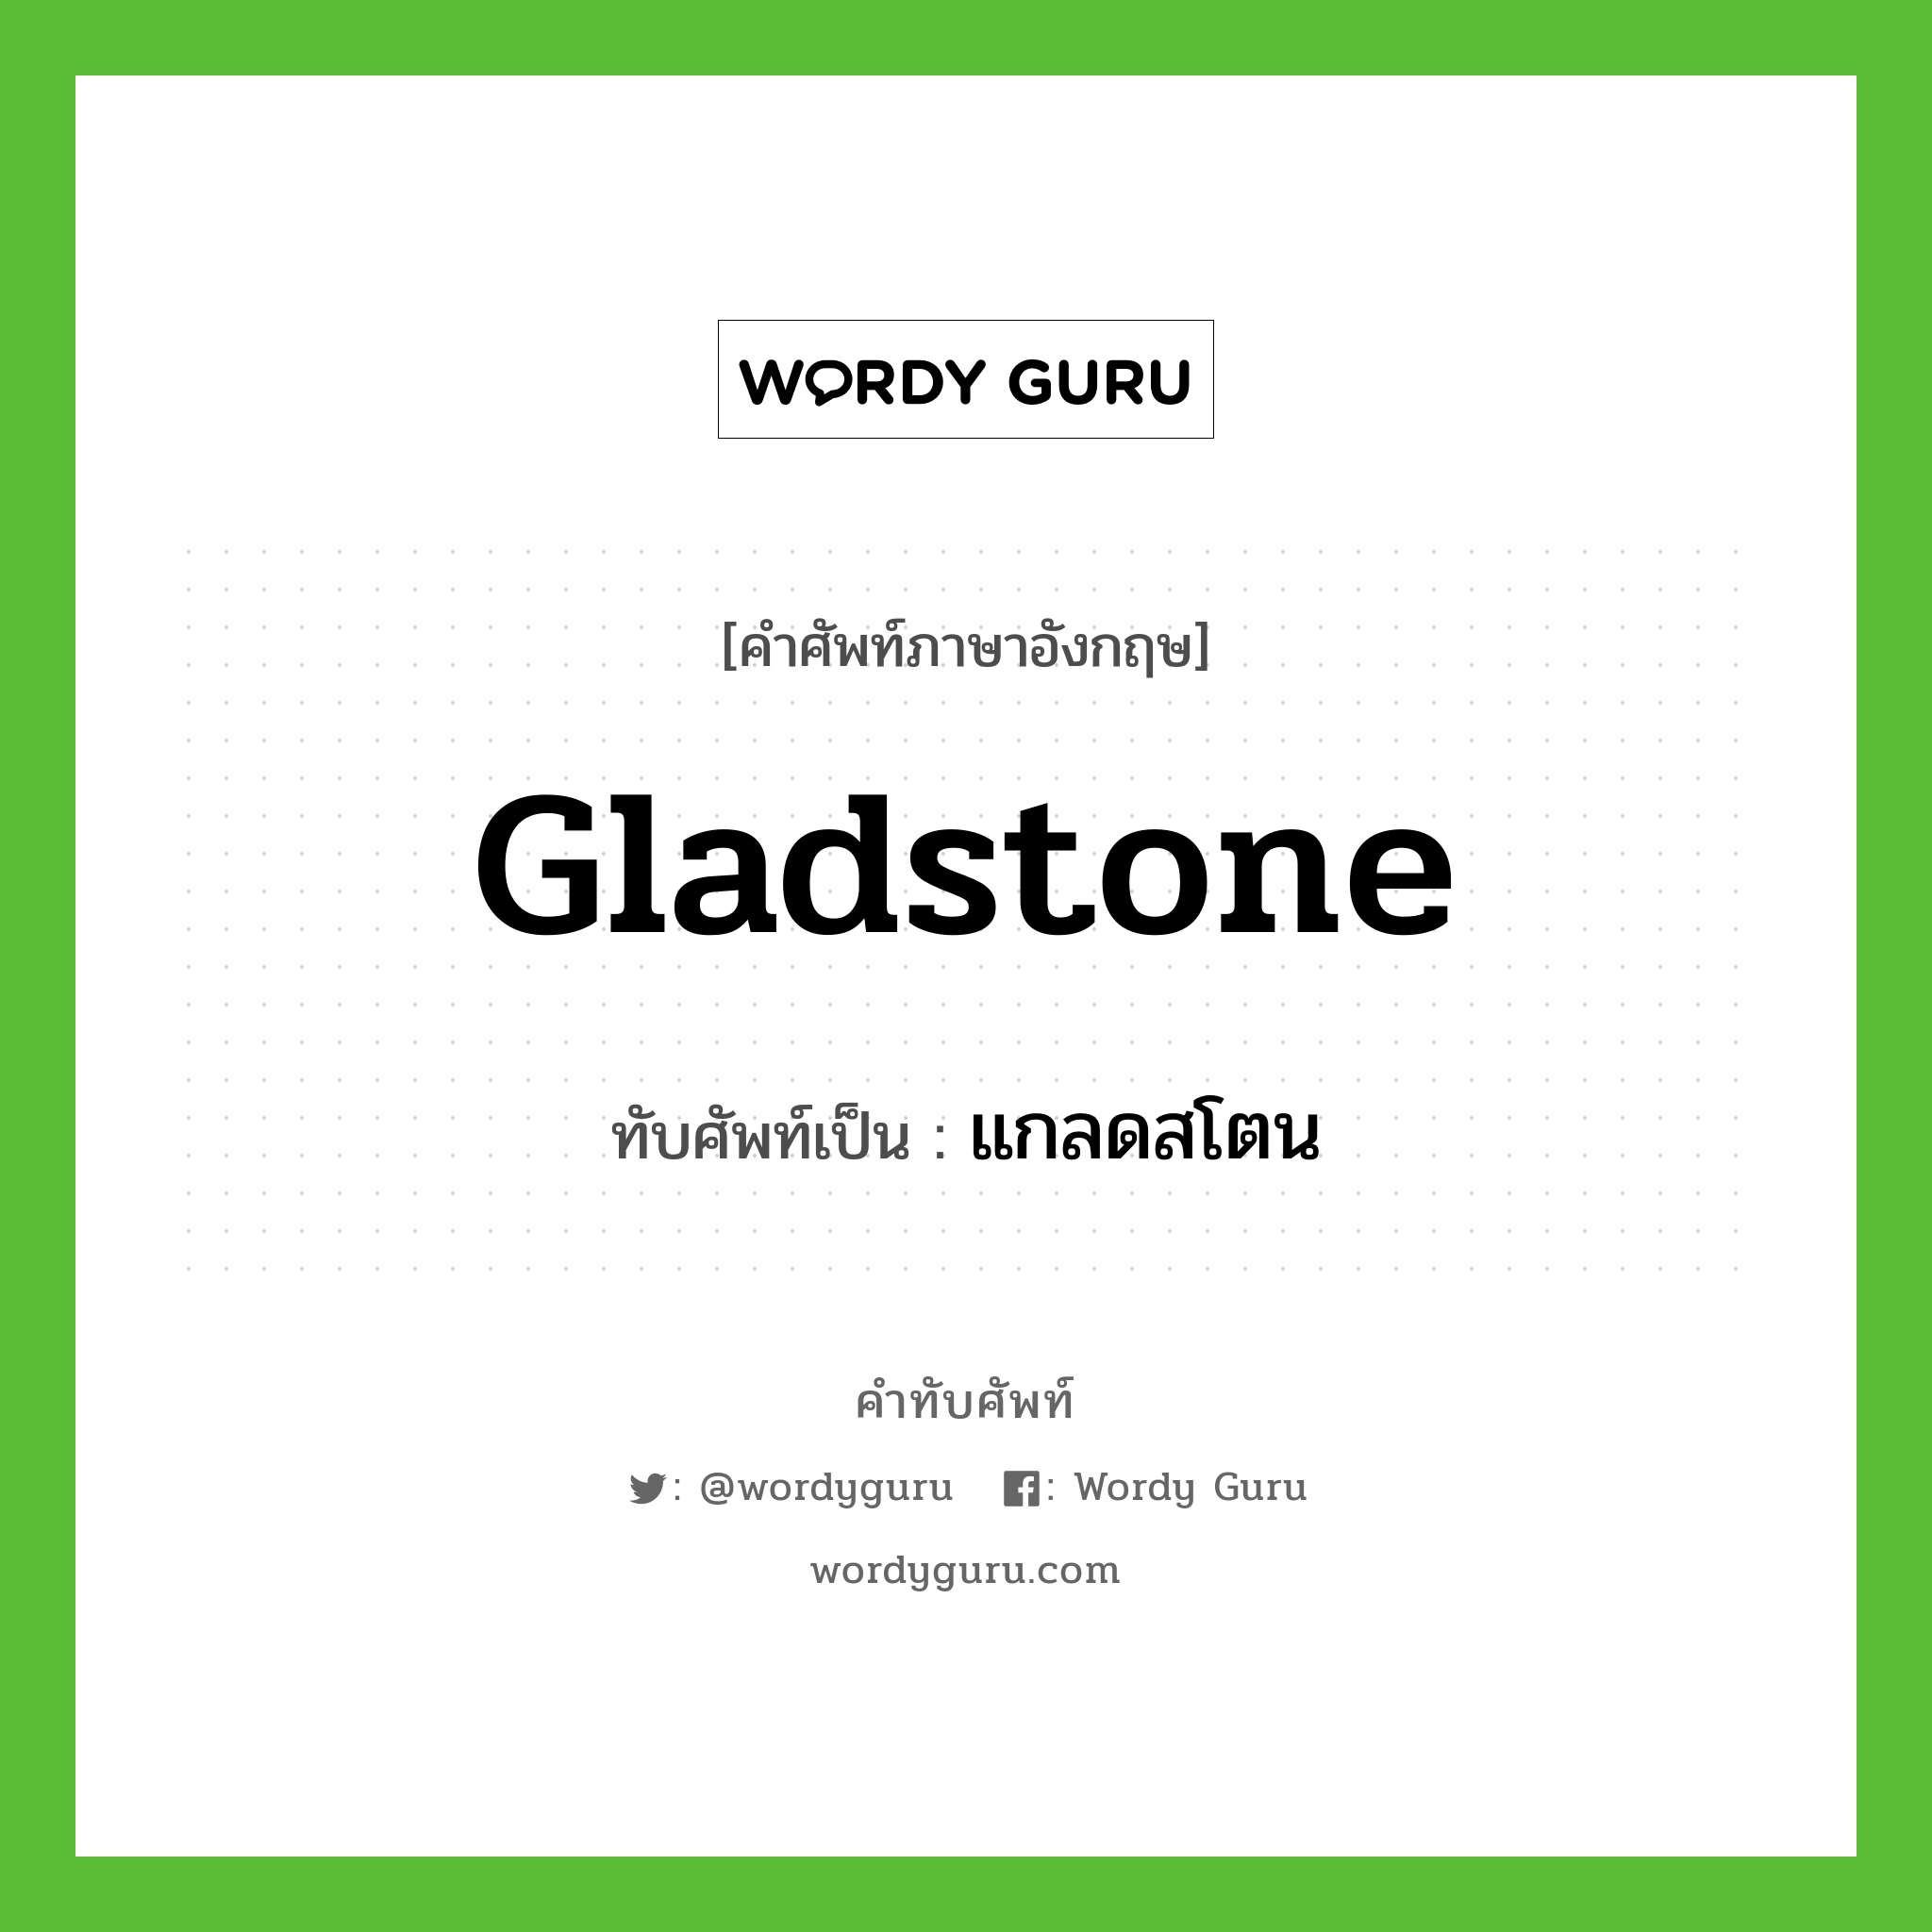 Gladstone เขียนเป็นคำไทยว่าอะไร?, คำศัพท์ภาษาอังกฤษ Gladstone ทับศัพท์เป็น แกลดสโตน